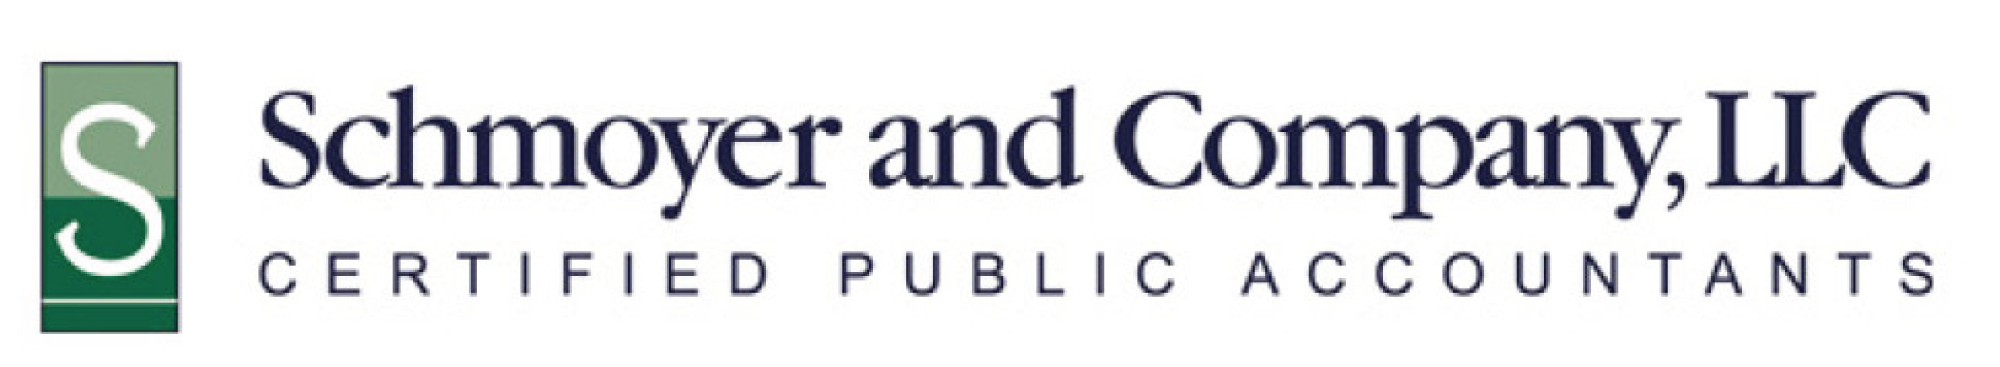 Schmoyer and Company, LLC Logo